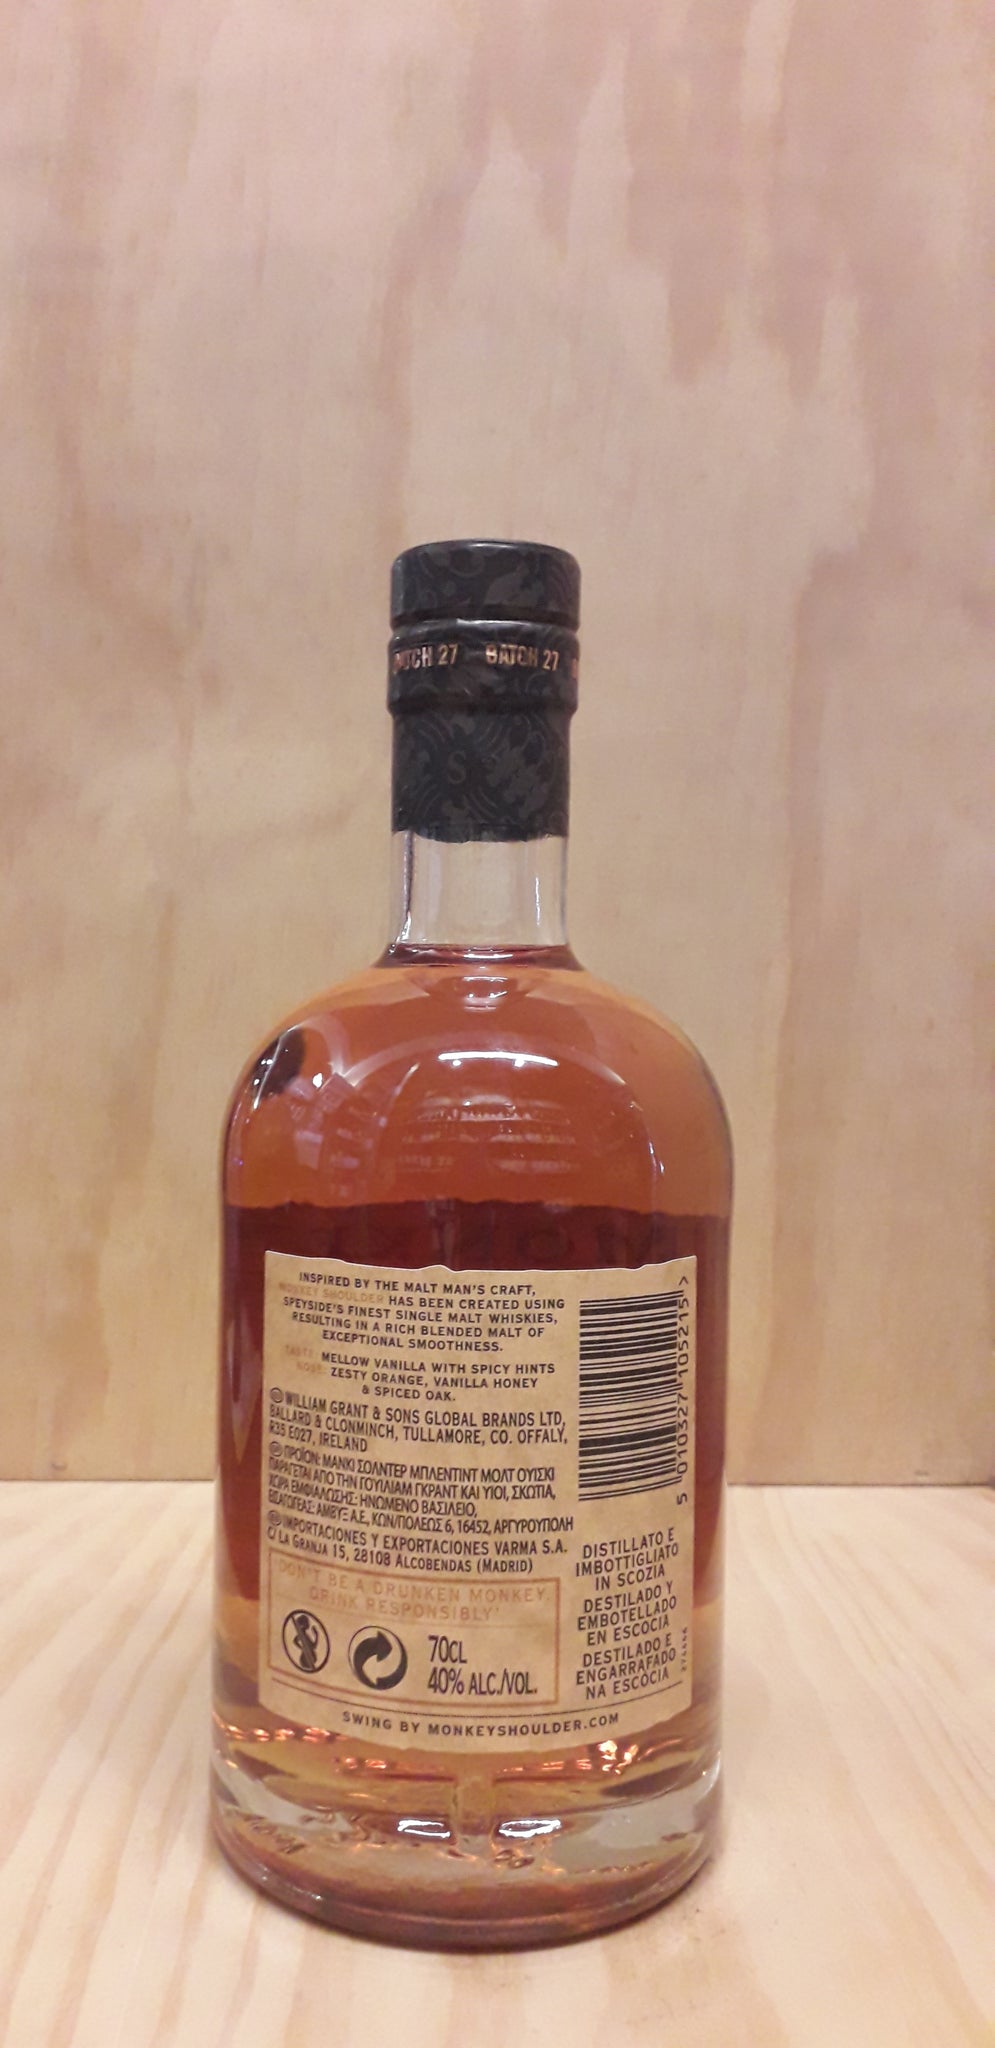 MONKEY SHOULDER Whisky blended malt 40% coffret avec 1 verre 70cl pas cher  